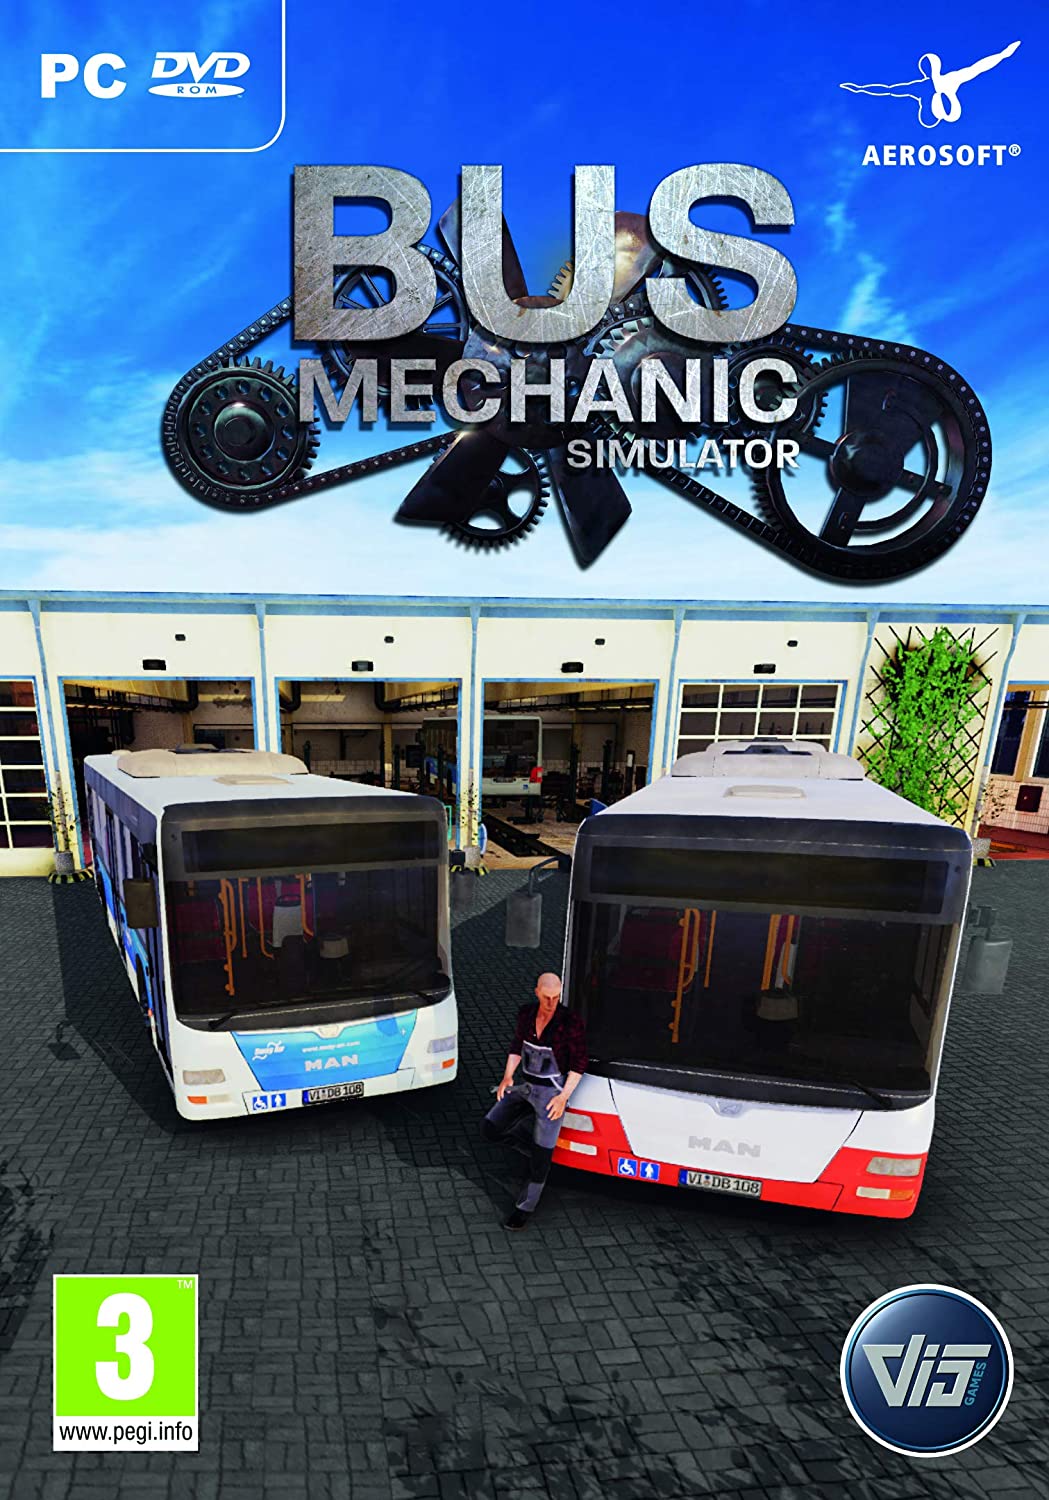 Busmechaniker-Simulator PC-DVD